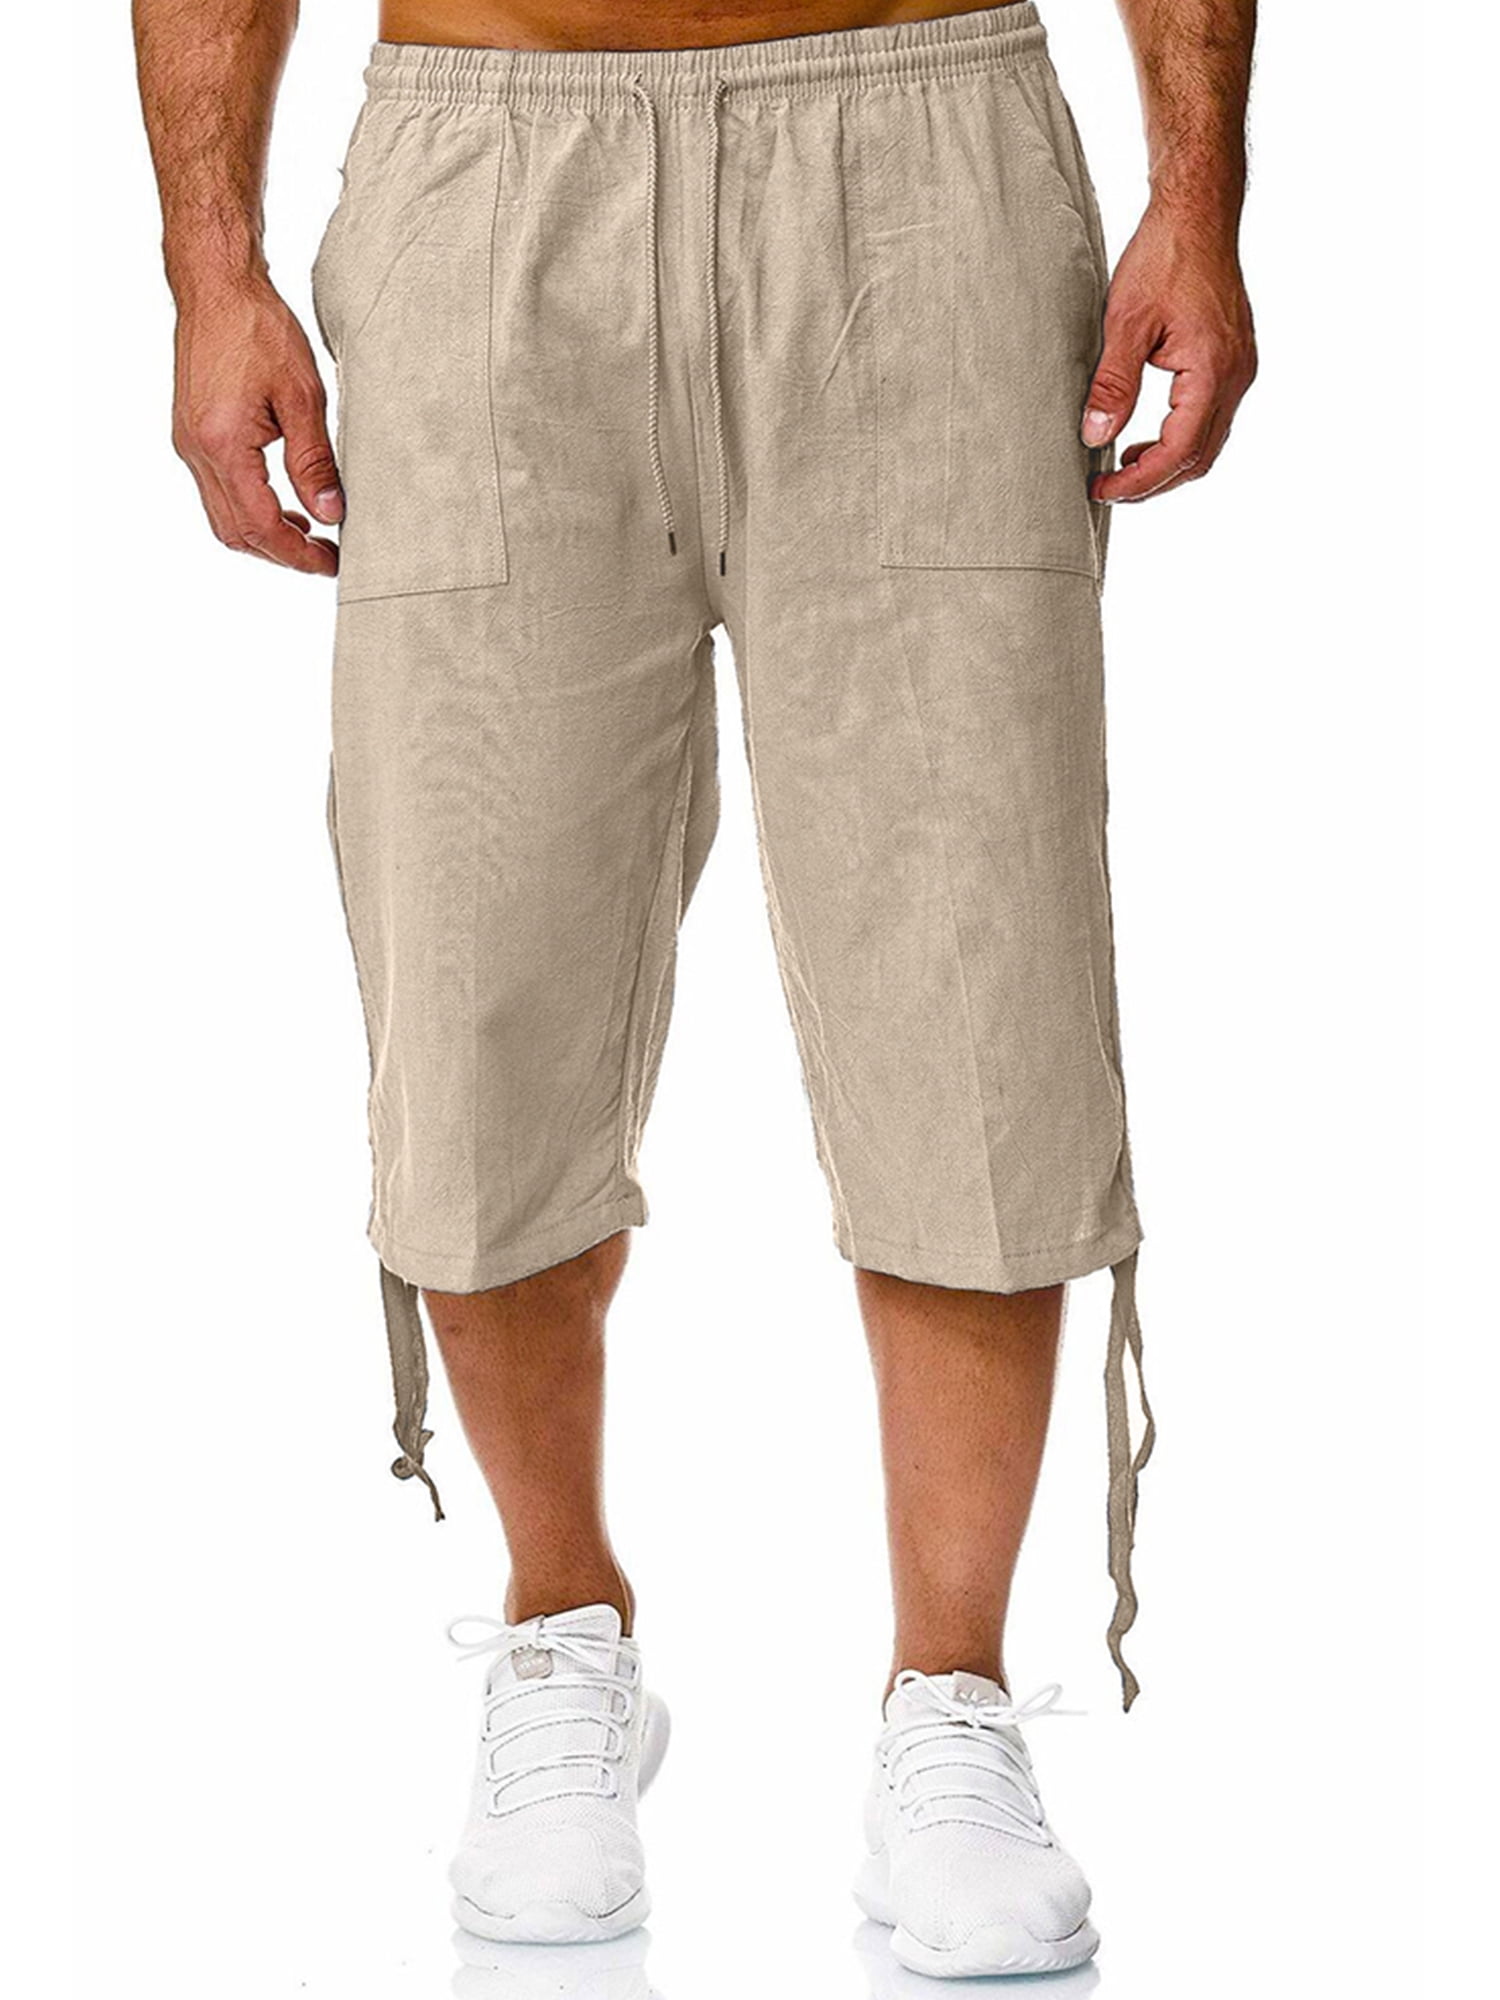 Men Cargo Shorts Men Beach Pants Men 3/4 Pants Leisure Short Pants Summer M  - 3XL 4XL (Color : 01 white, Size : M) price in UAE | Amazon UAE | kanbkam